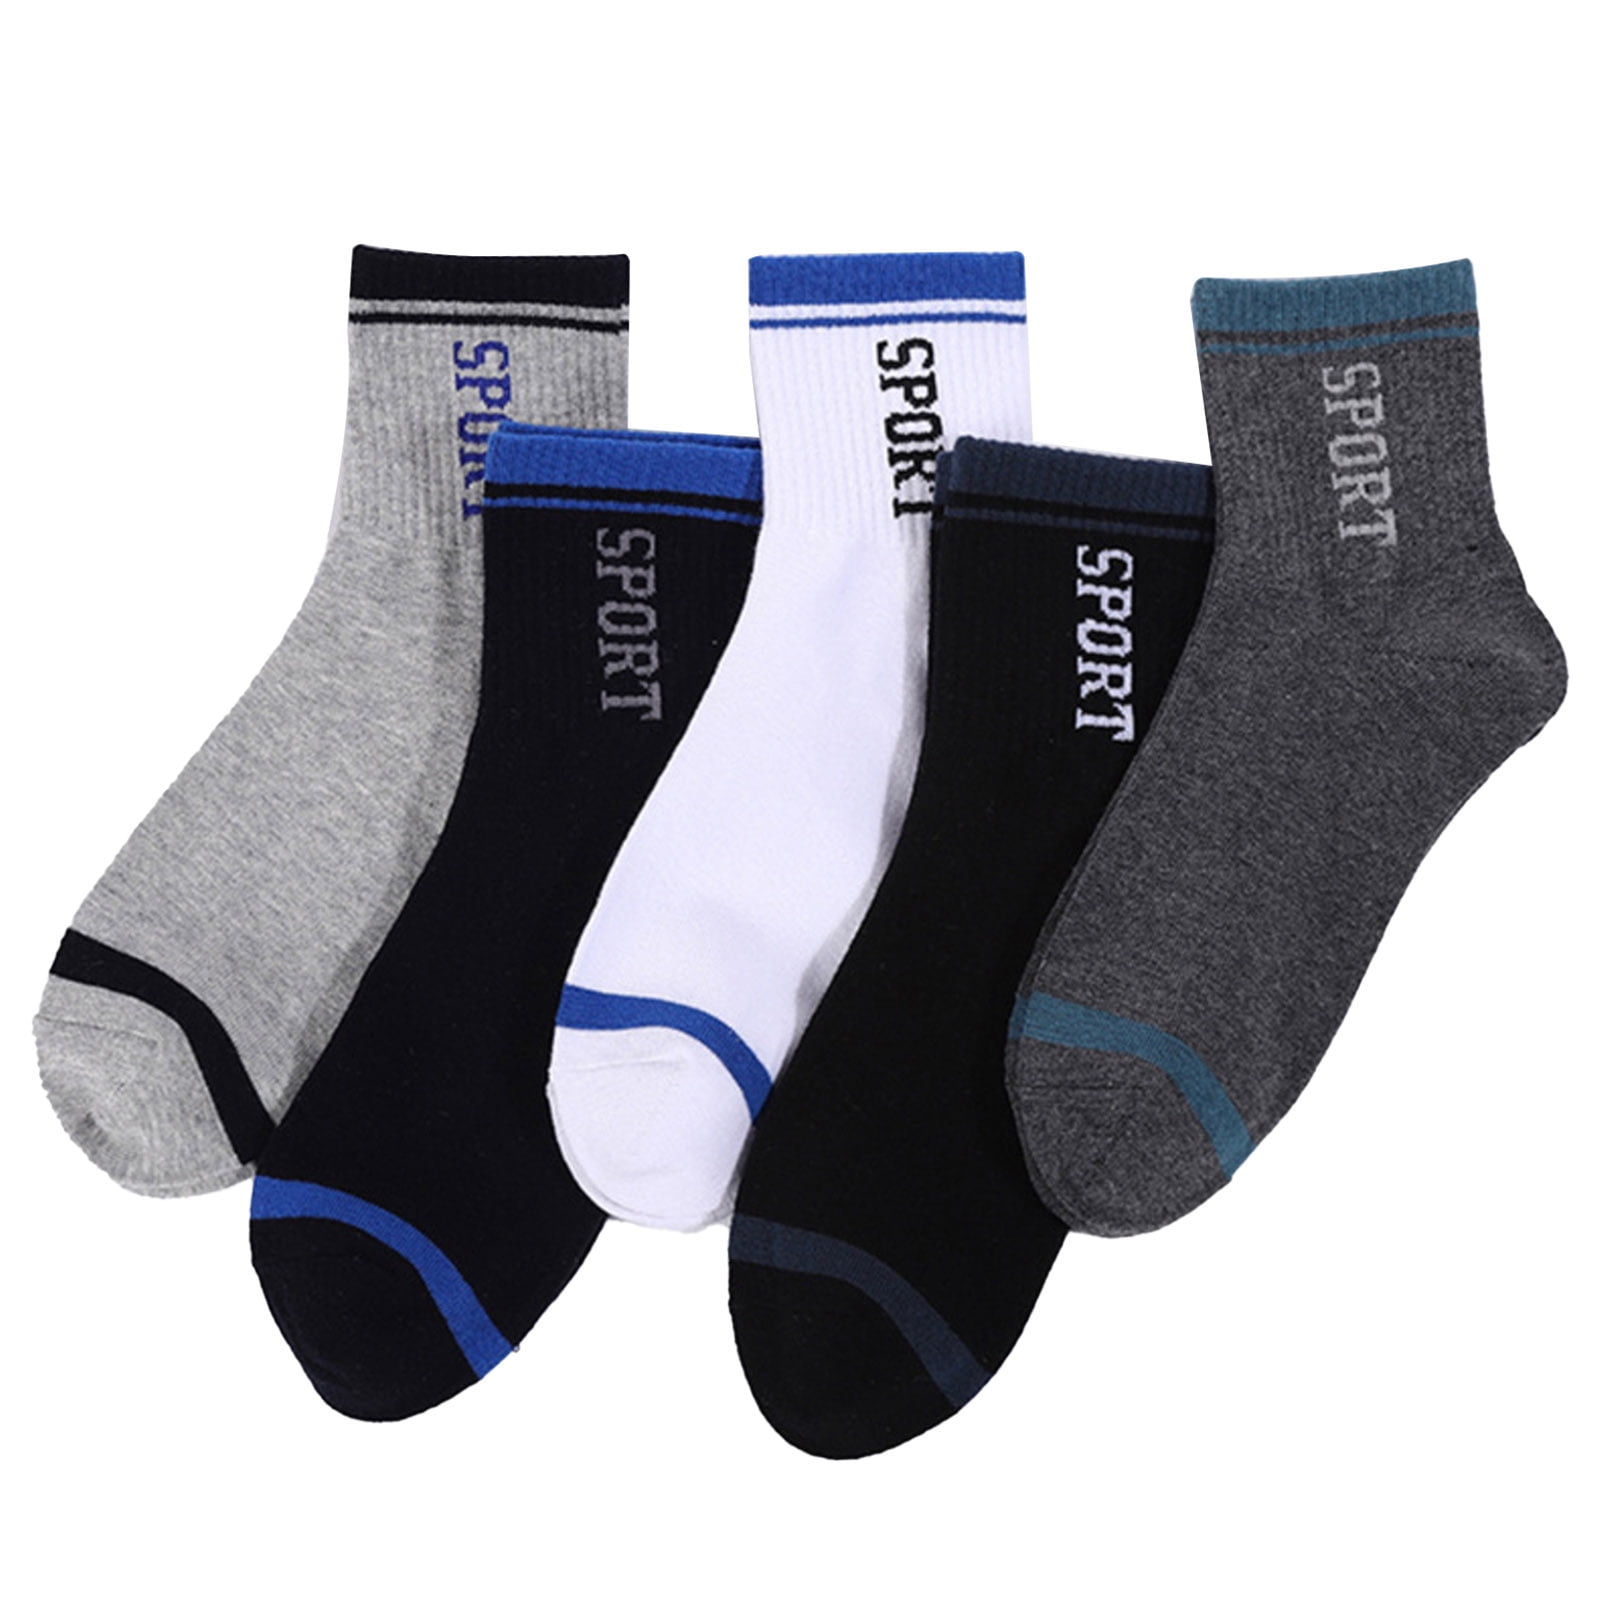 WeciBor Men's Athletic Crew Running Socks Cotton Breathable Thick Sport Hiking Socks for Men 5 Pack 